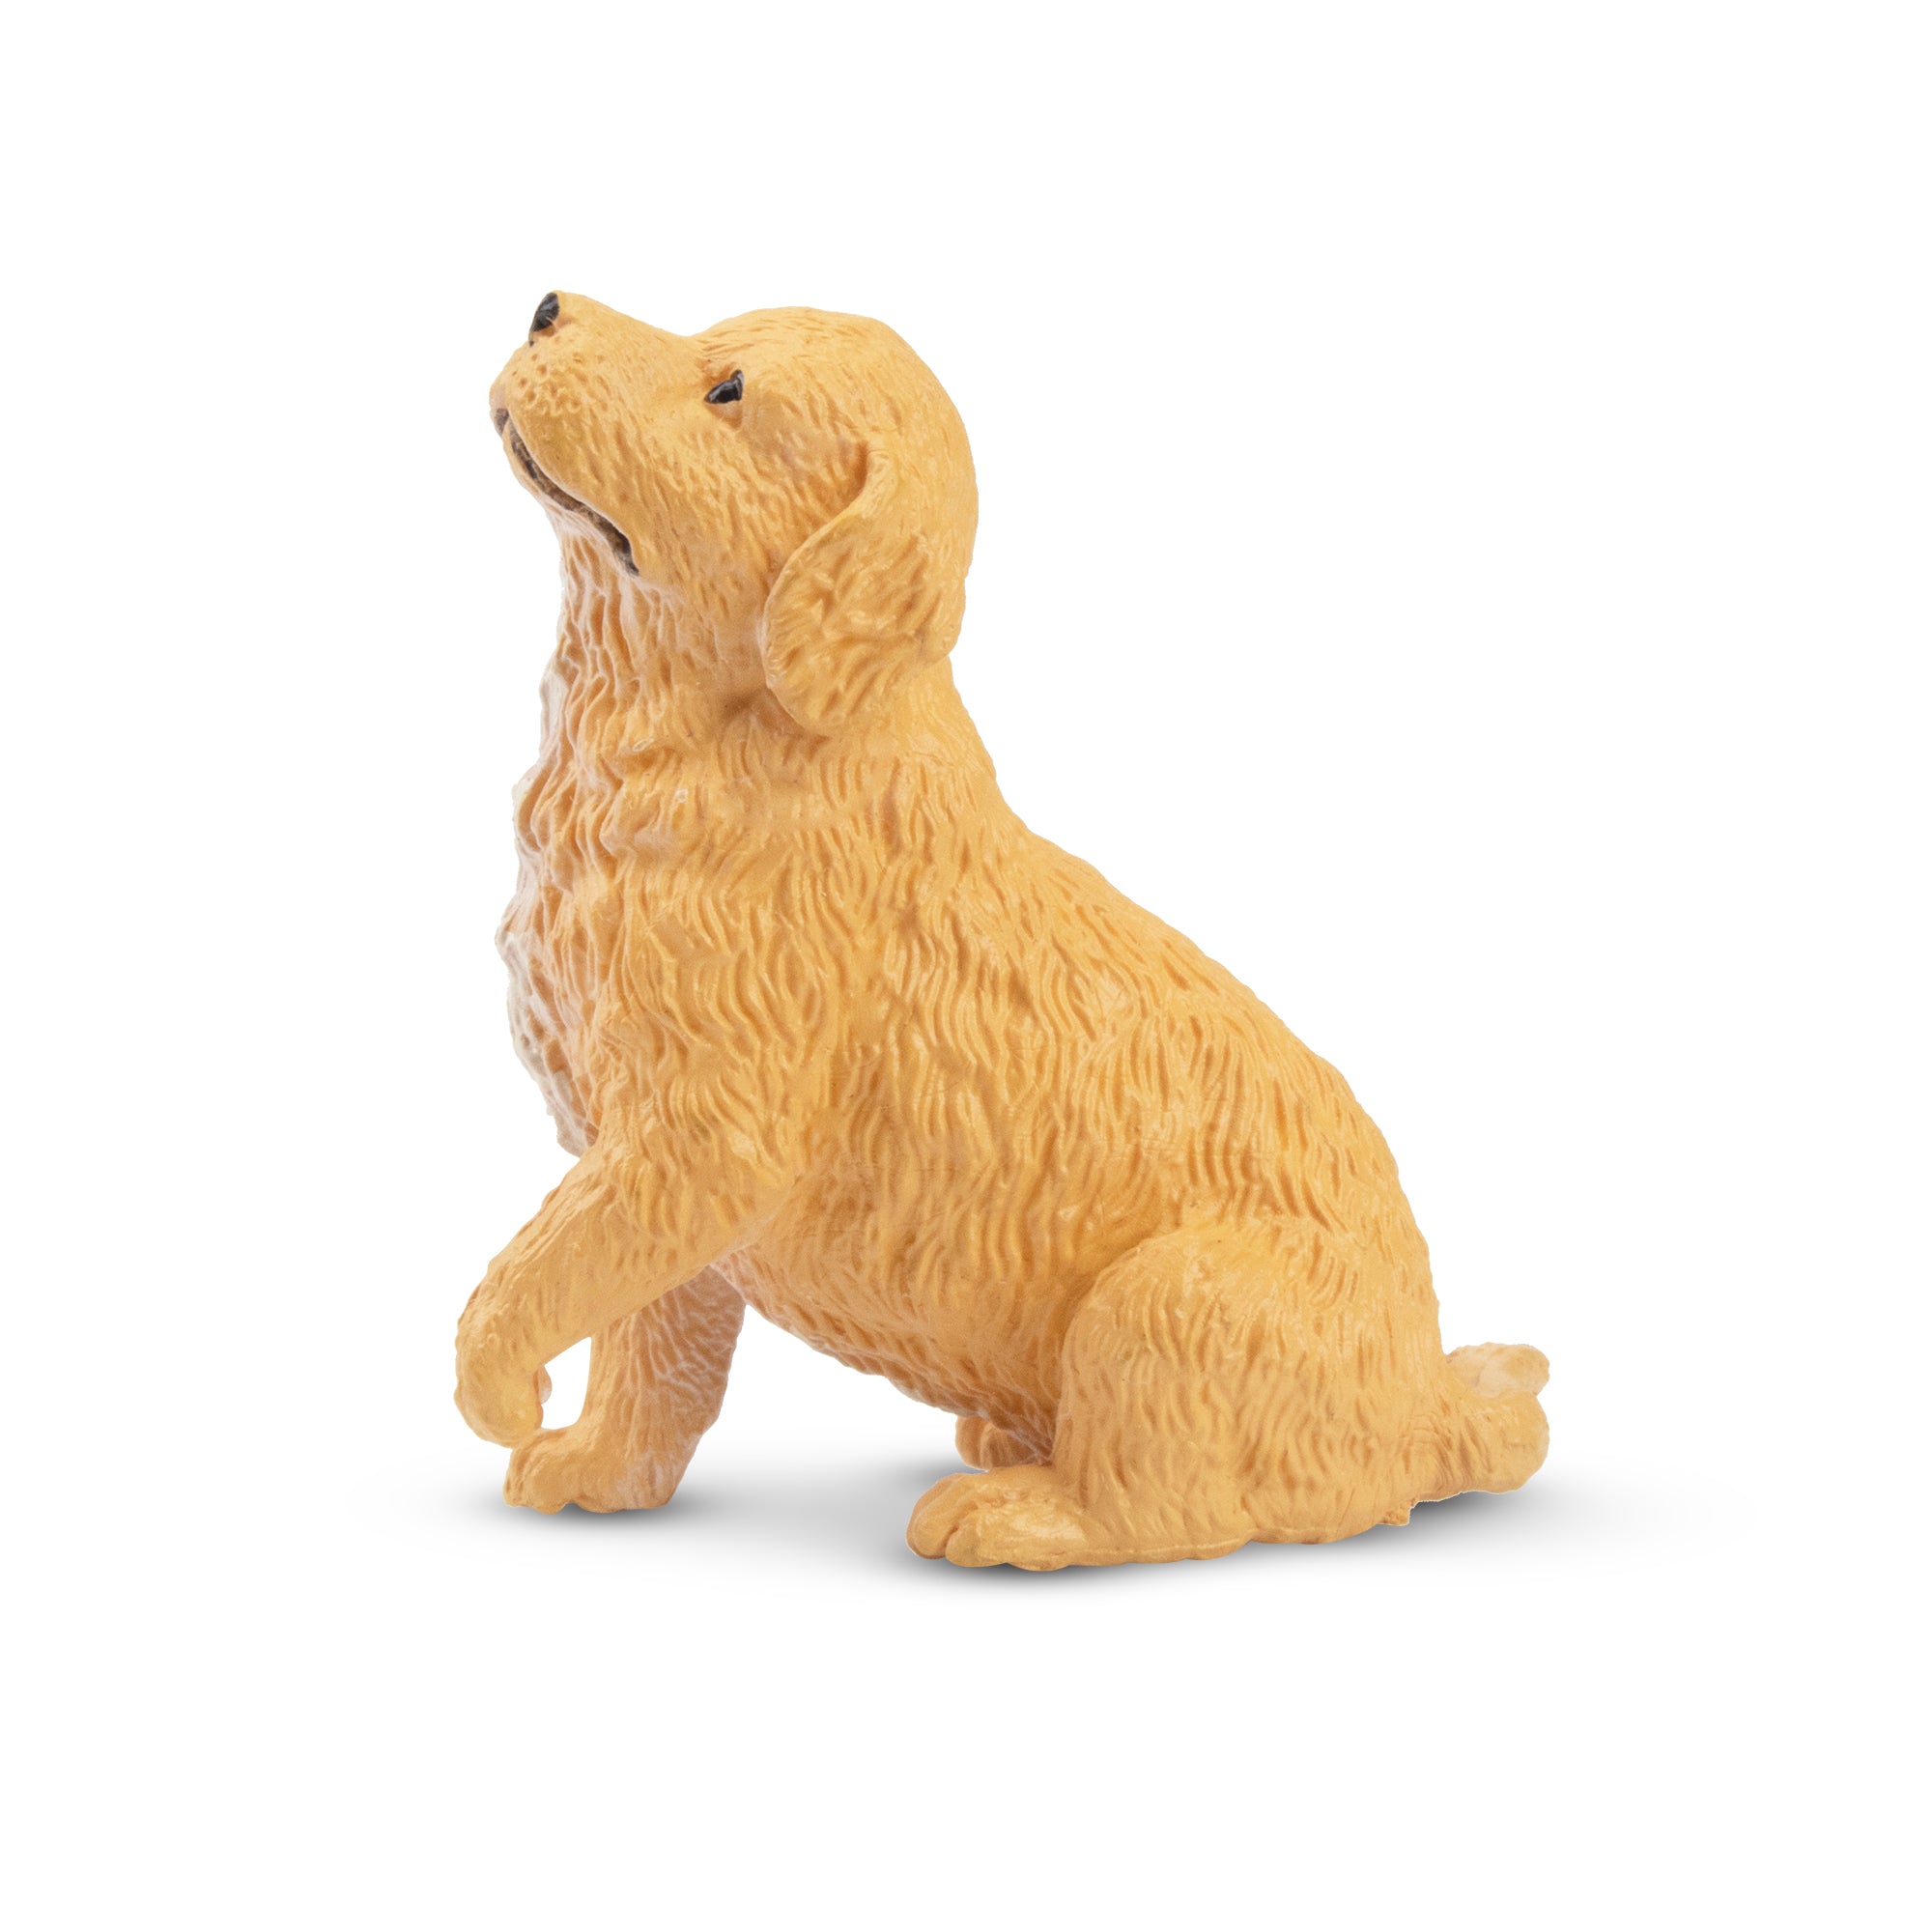 Toymany Mini Sitting Golden Retriever Puppy Figurine Toy